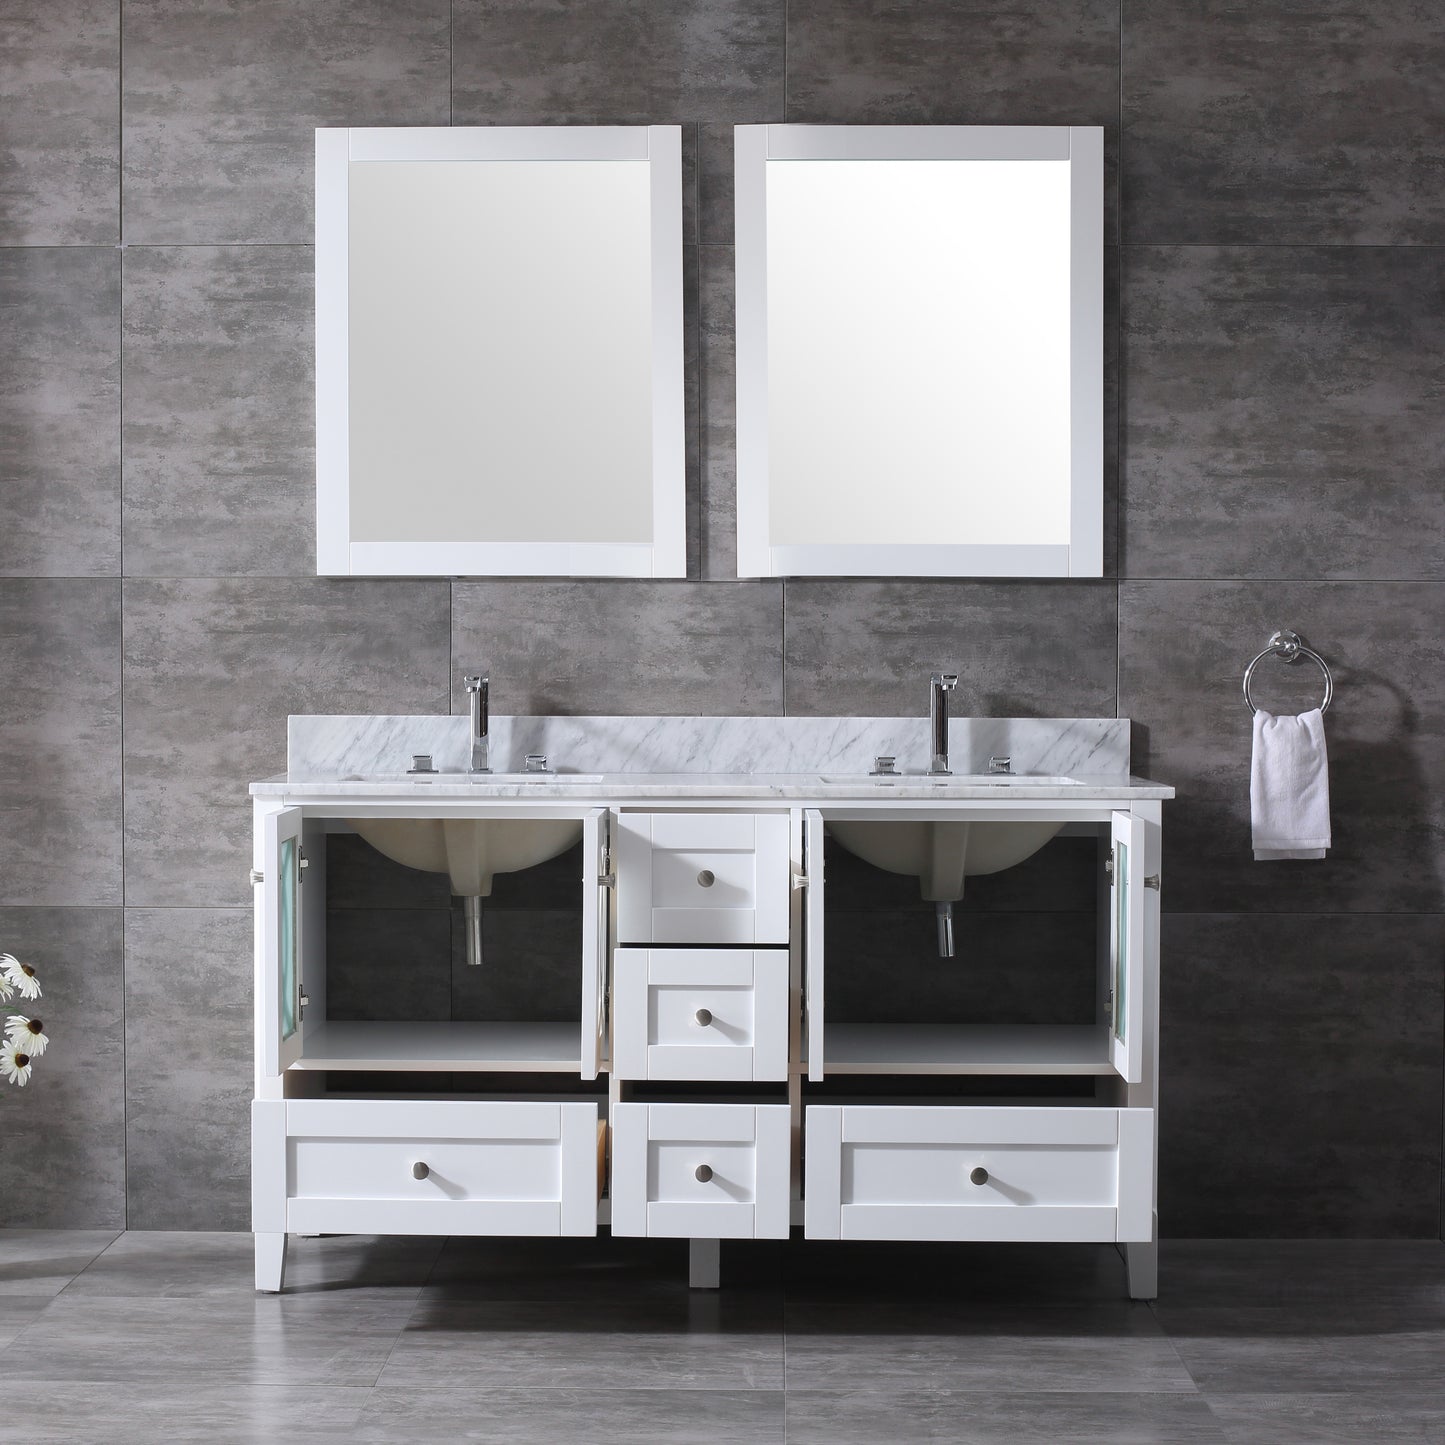 60" width Bathroom Vanity in White with Marble Countertop,Backsplash and Mirror